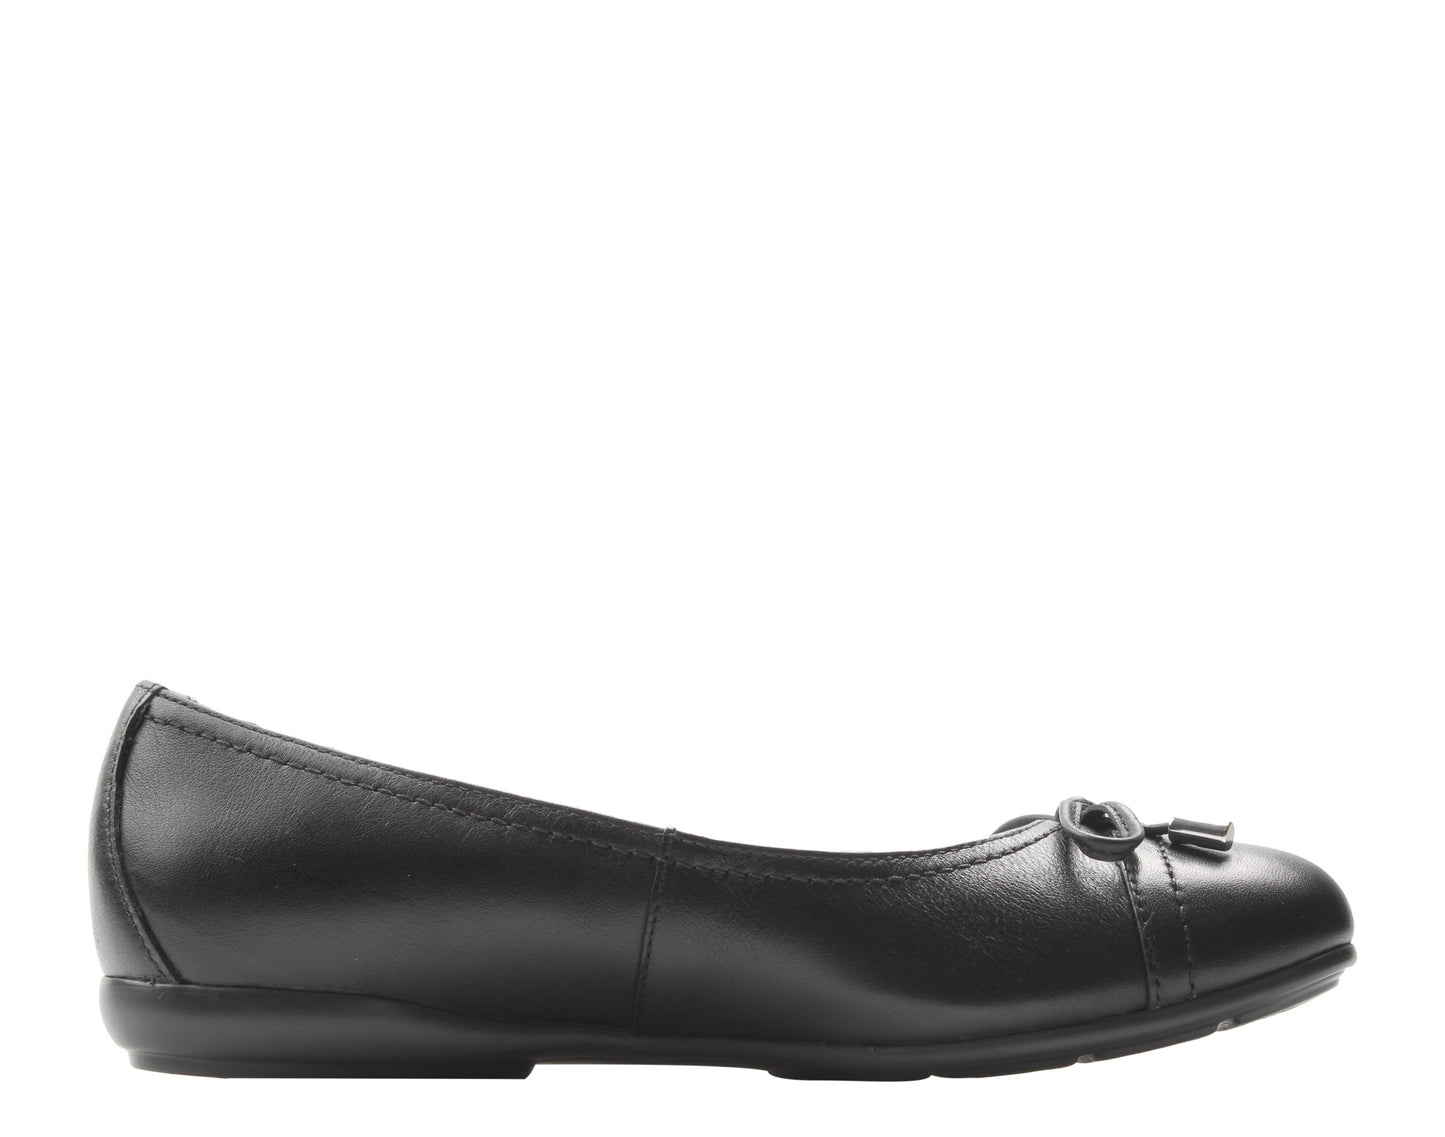 Geox Annytah Ballet Flat Women's Casual Shoes